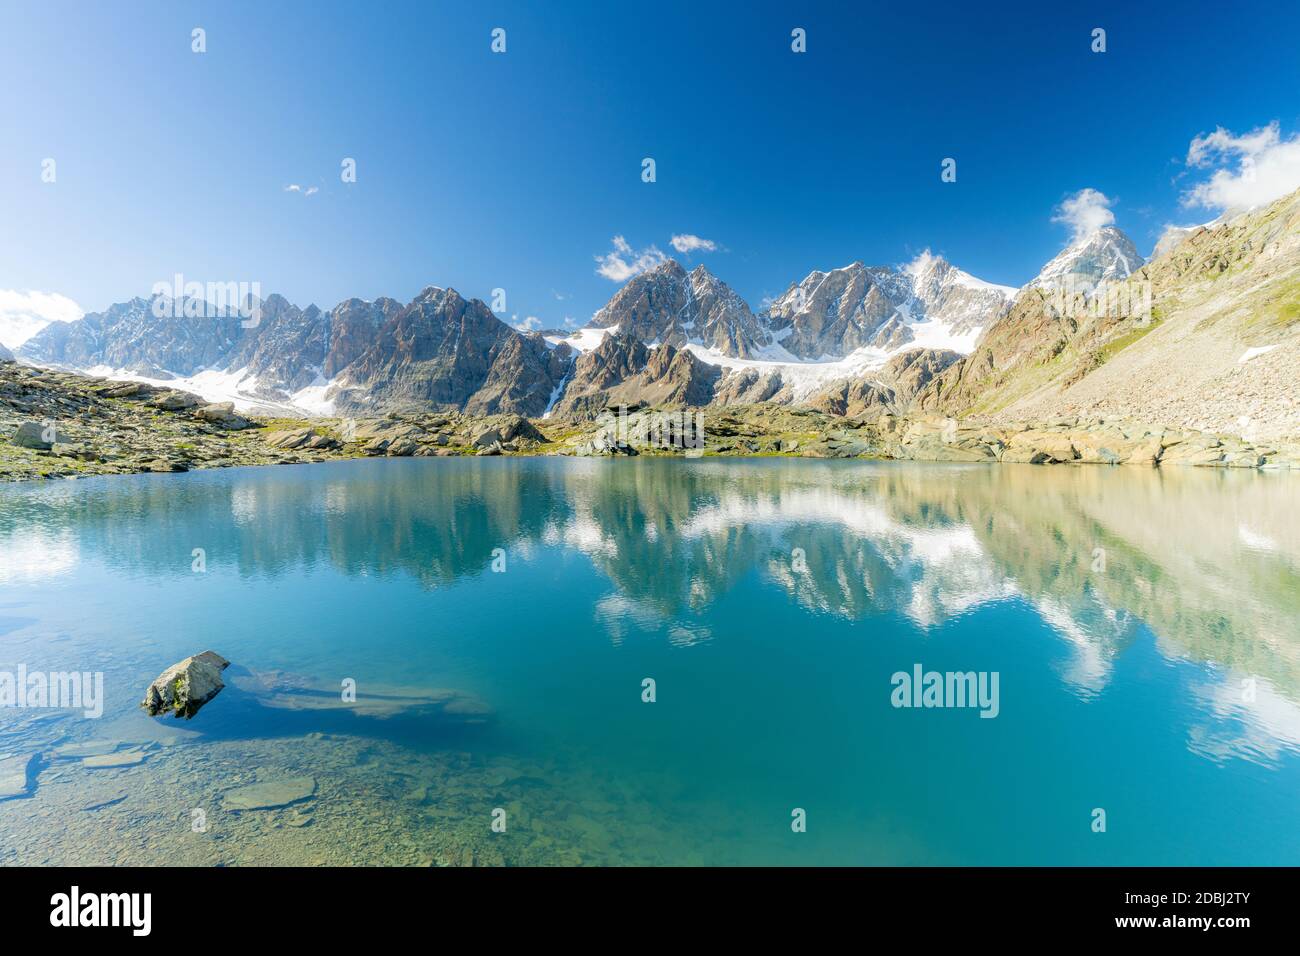 Montañas del Grupo Bernina reflejadas en las aguas claras del lago Forbici, Valmalenco, Valtellina, provincia de Sondrio, Lombardía, Italia, Europa Foto de stock